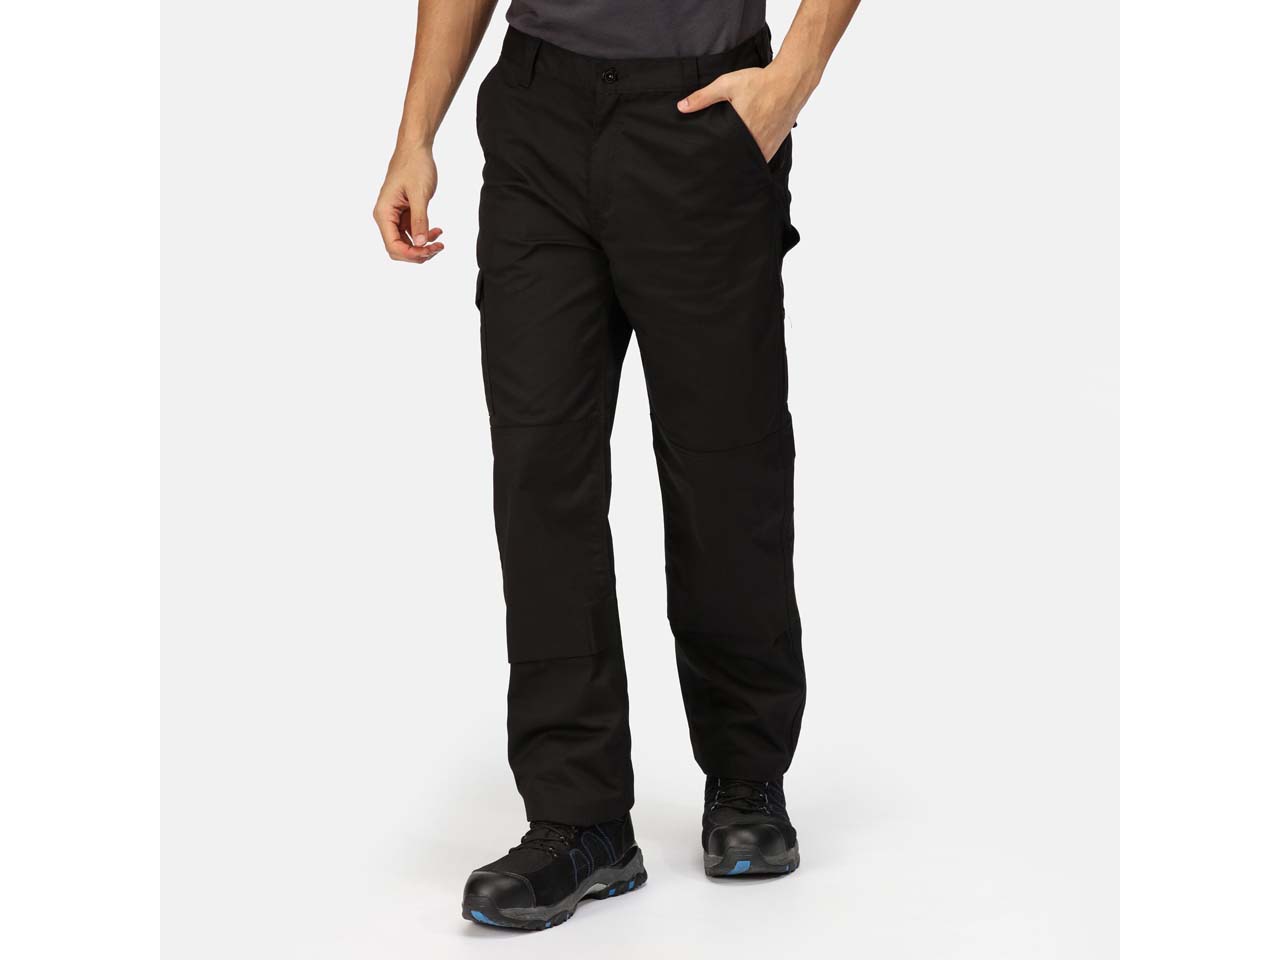 Regatta Professional Workwear Incursion Trousers - Black | littlewoods.com